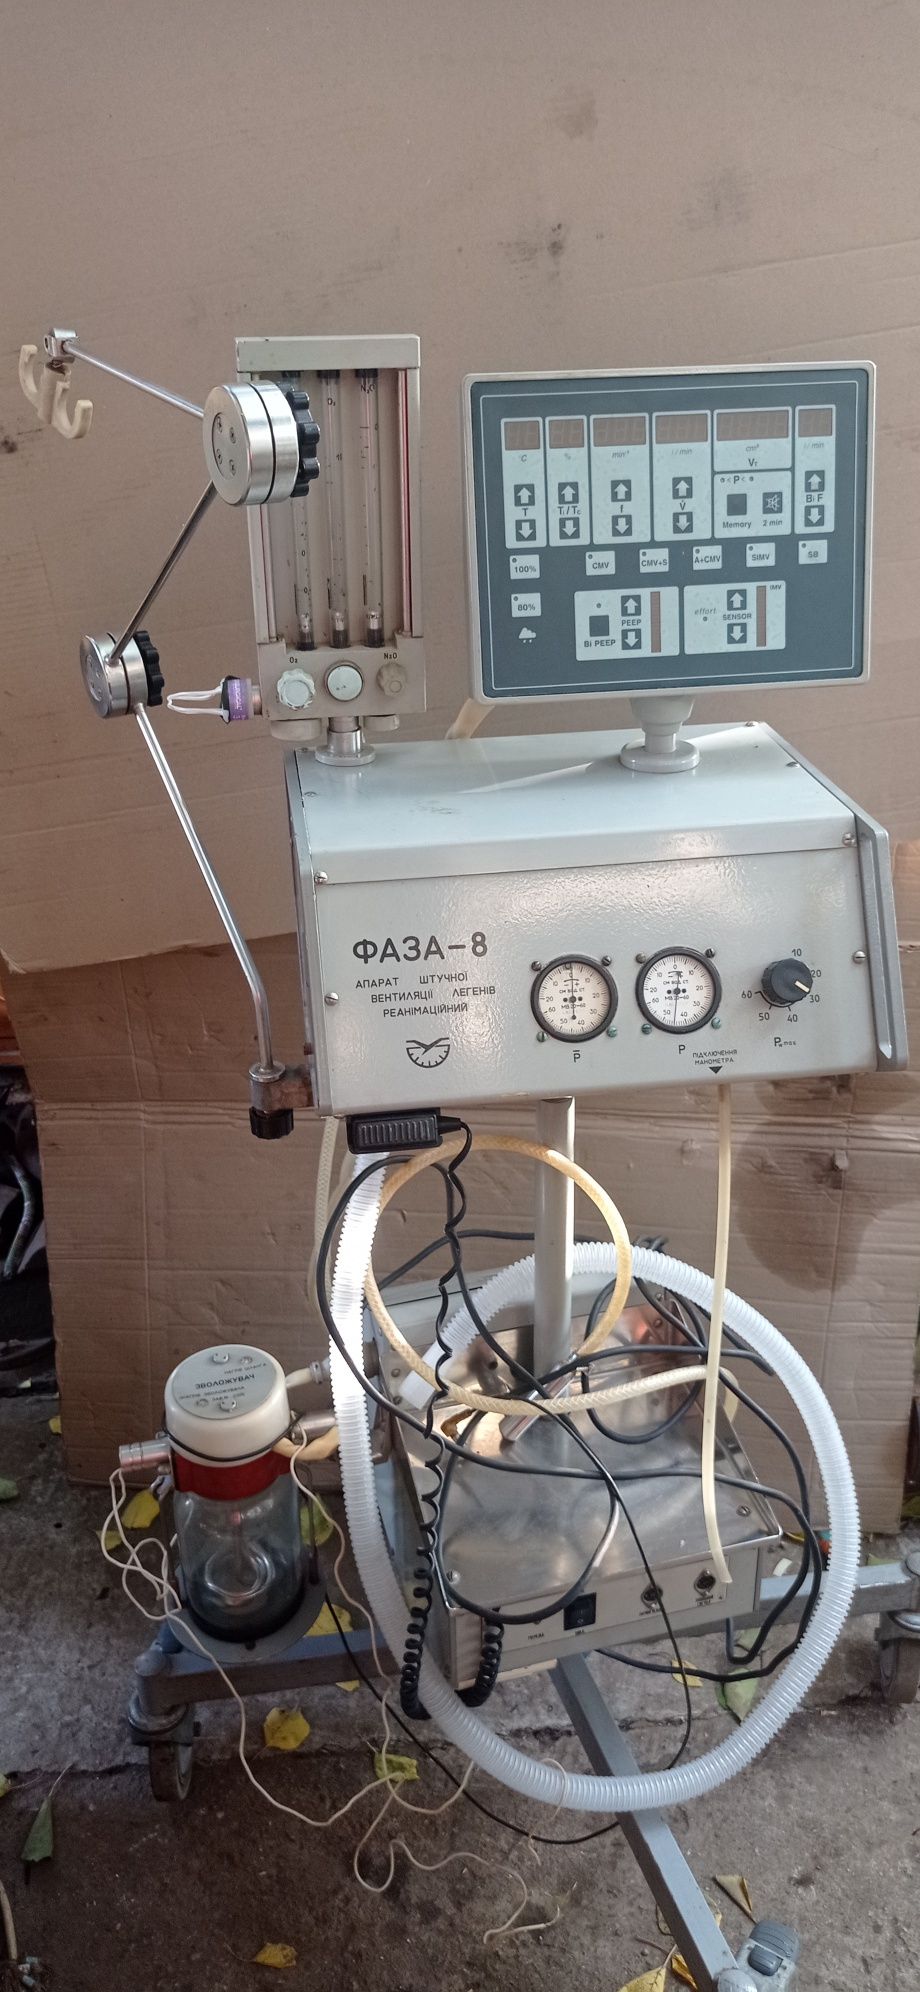 Апарат штучної вентиляції легень фаза-8 ШВЛ  искусственной вентиляции